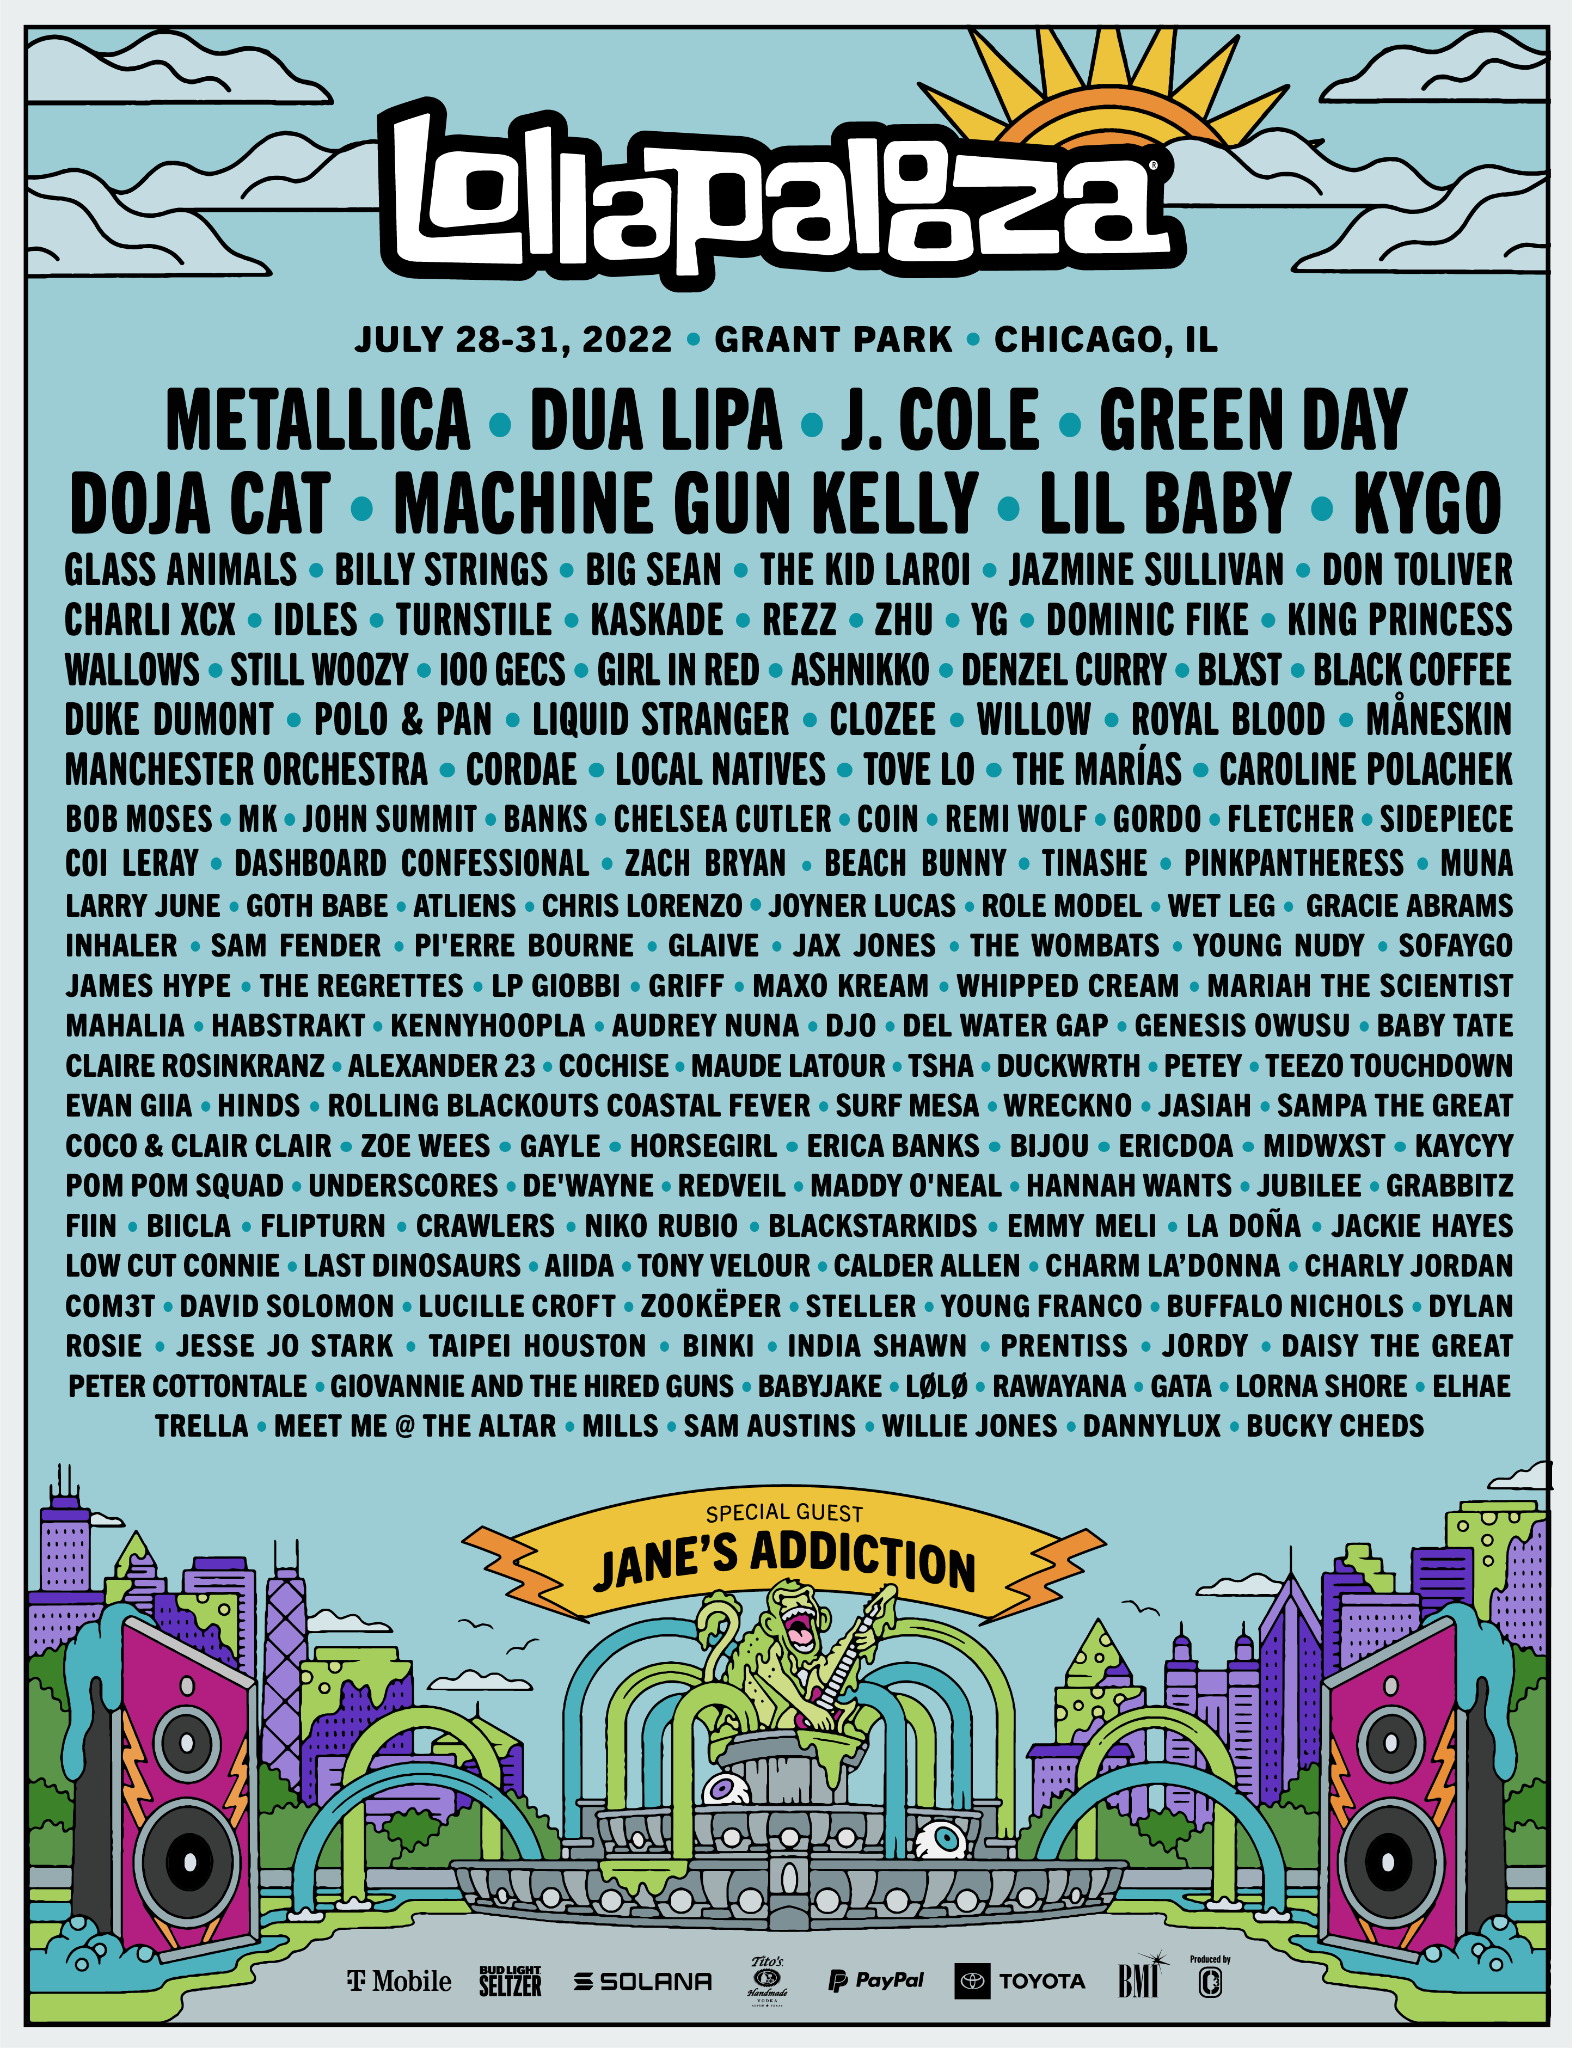 Lollapalooza 2022 lineup. Photo provided.